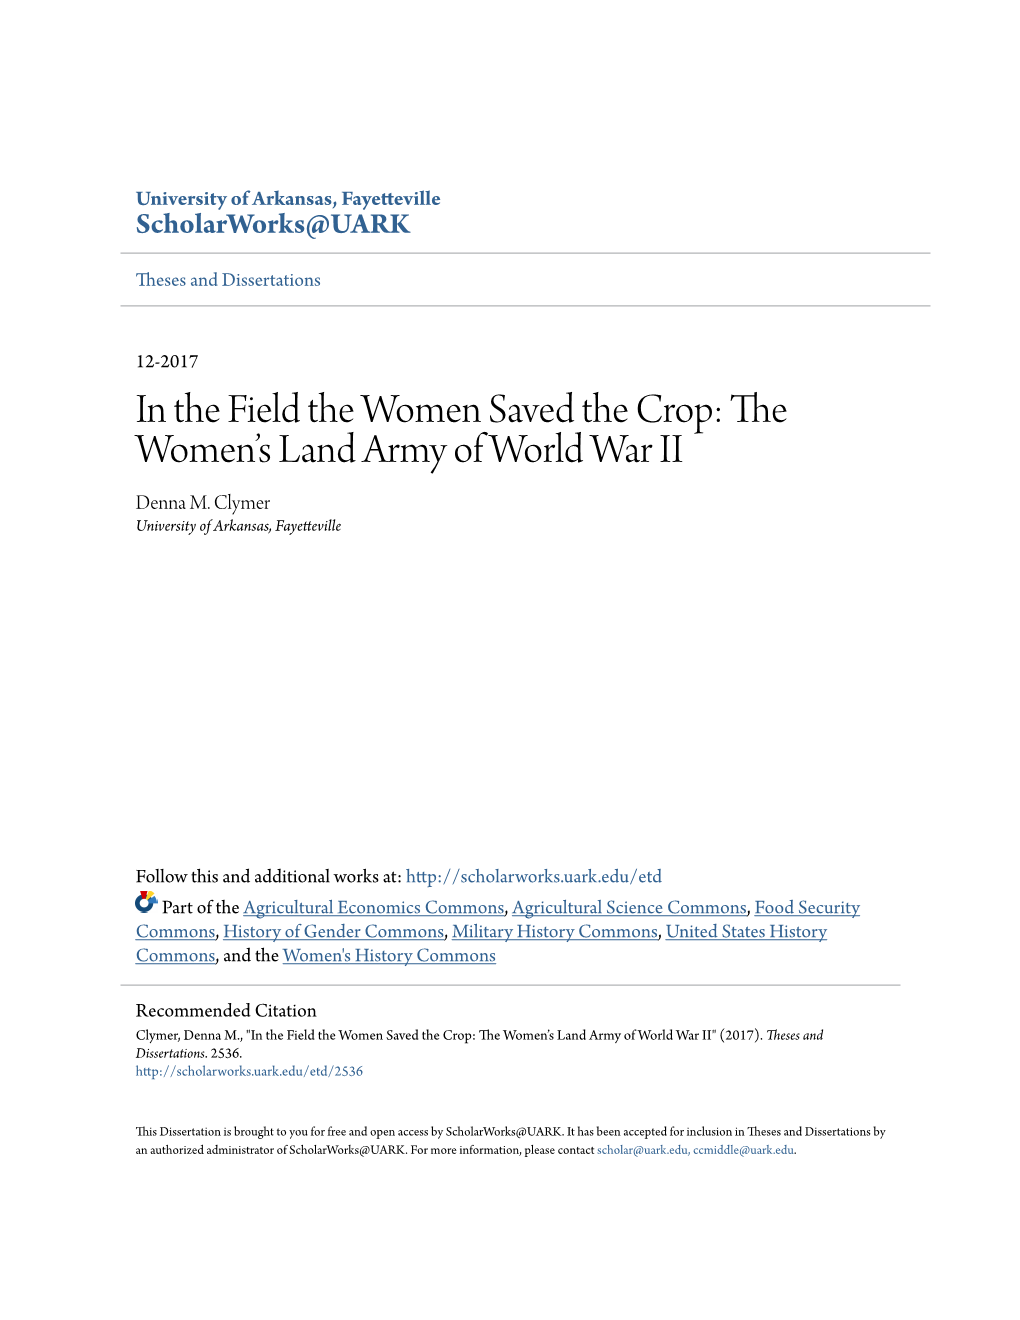 The Women's Land Army of World War II